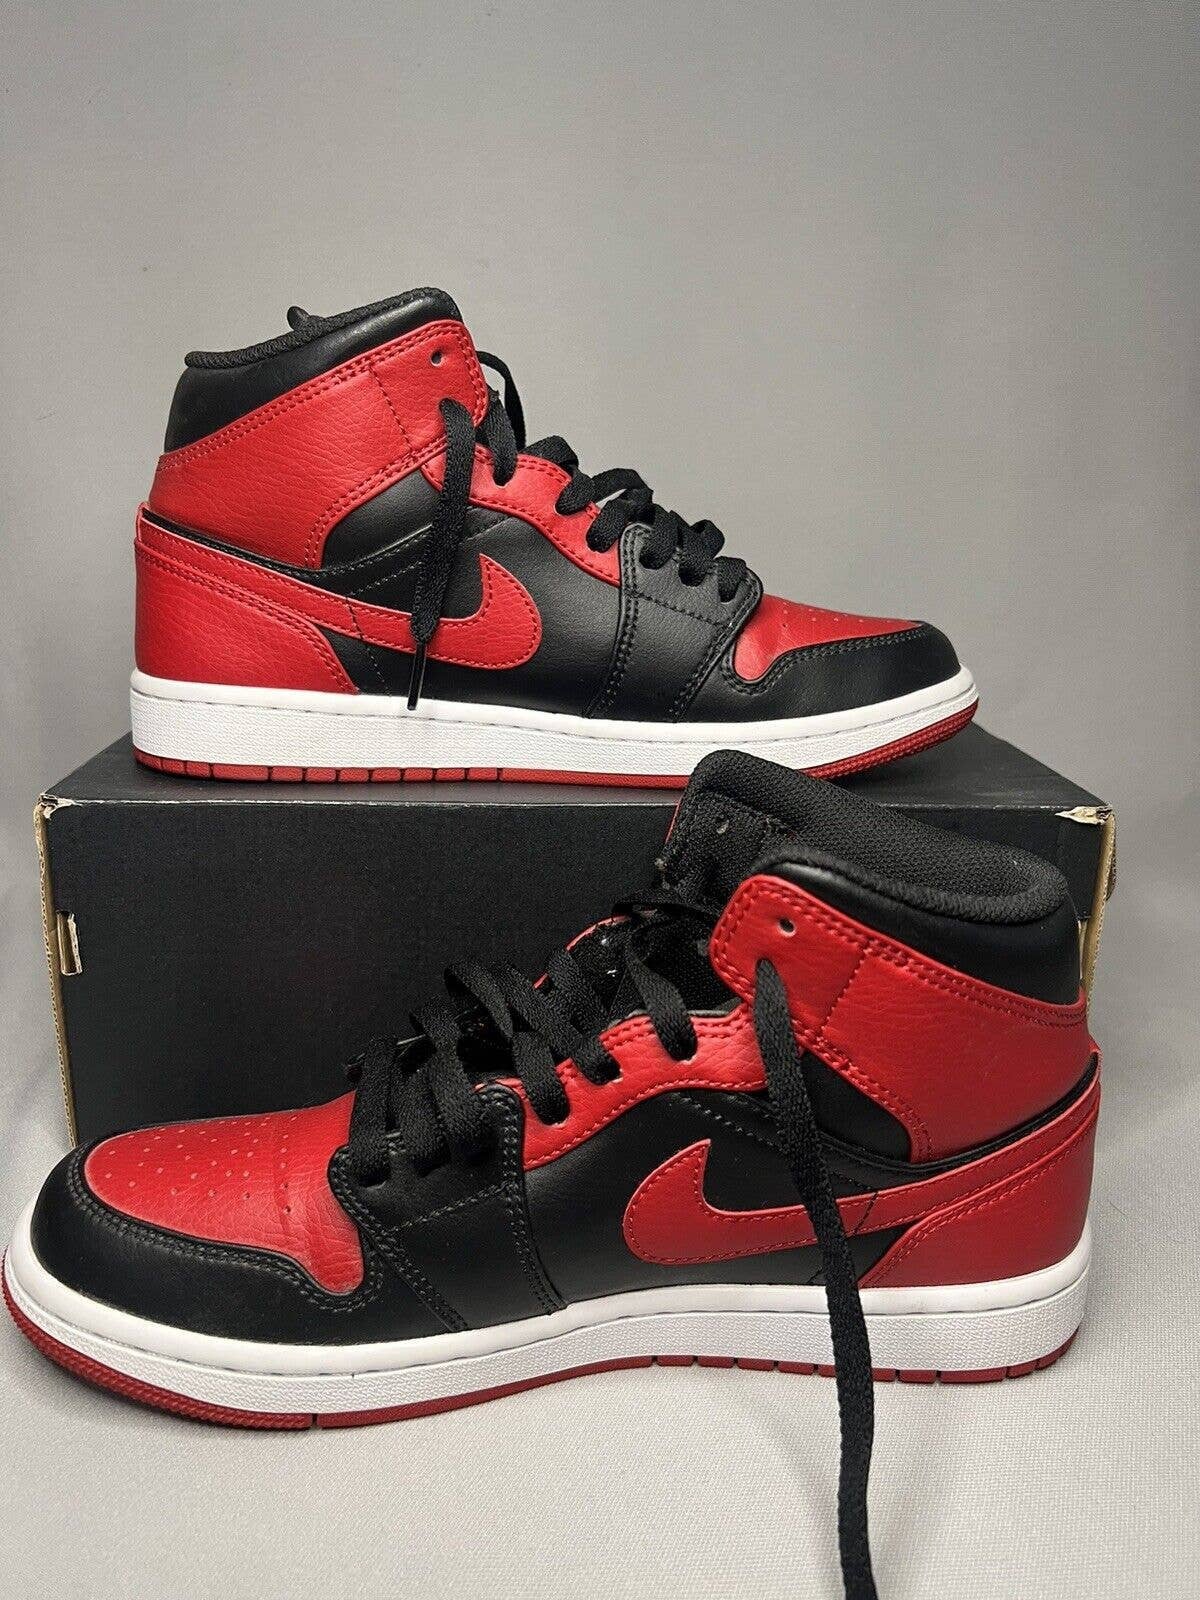 Nike Air Jordan 1s Origin Story Sneaker Art Sneaker Wall 